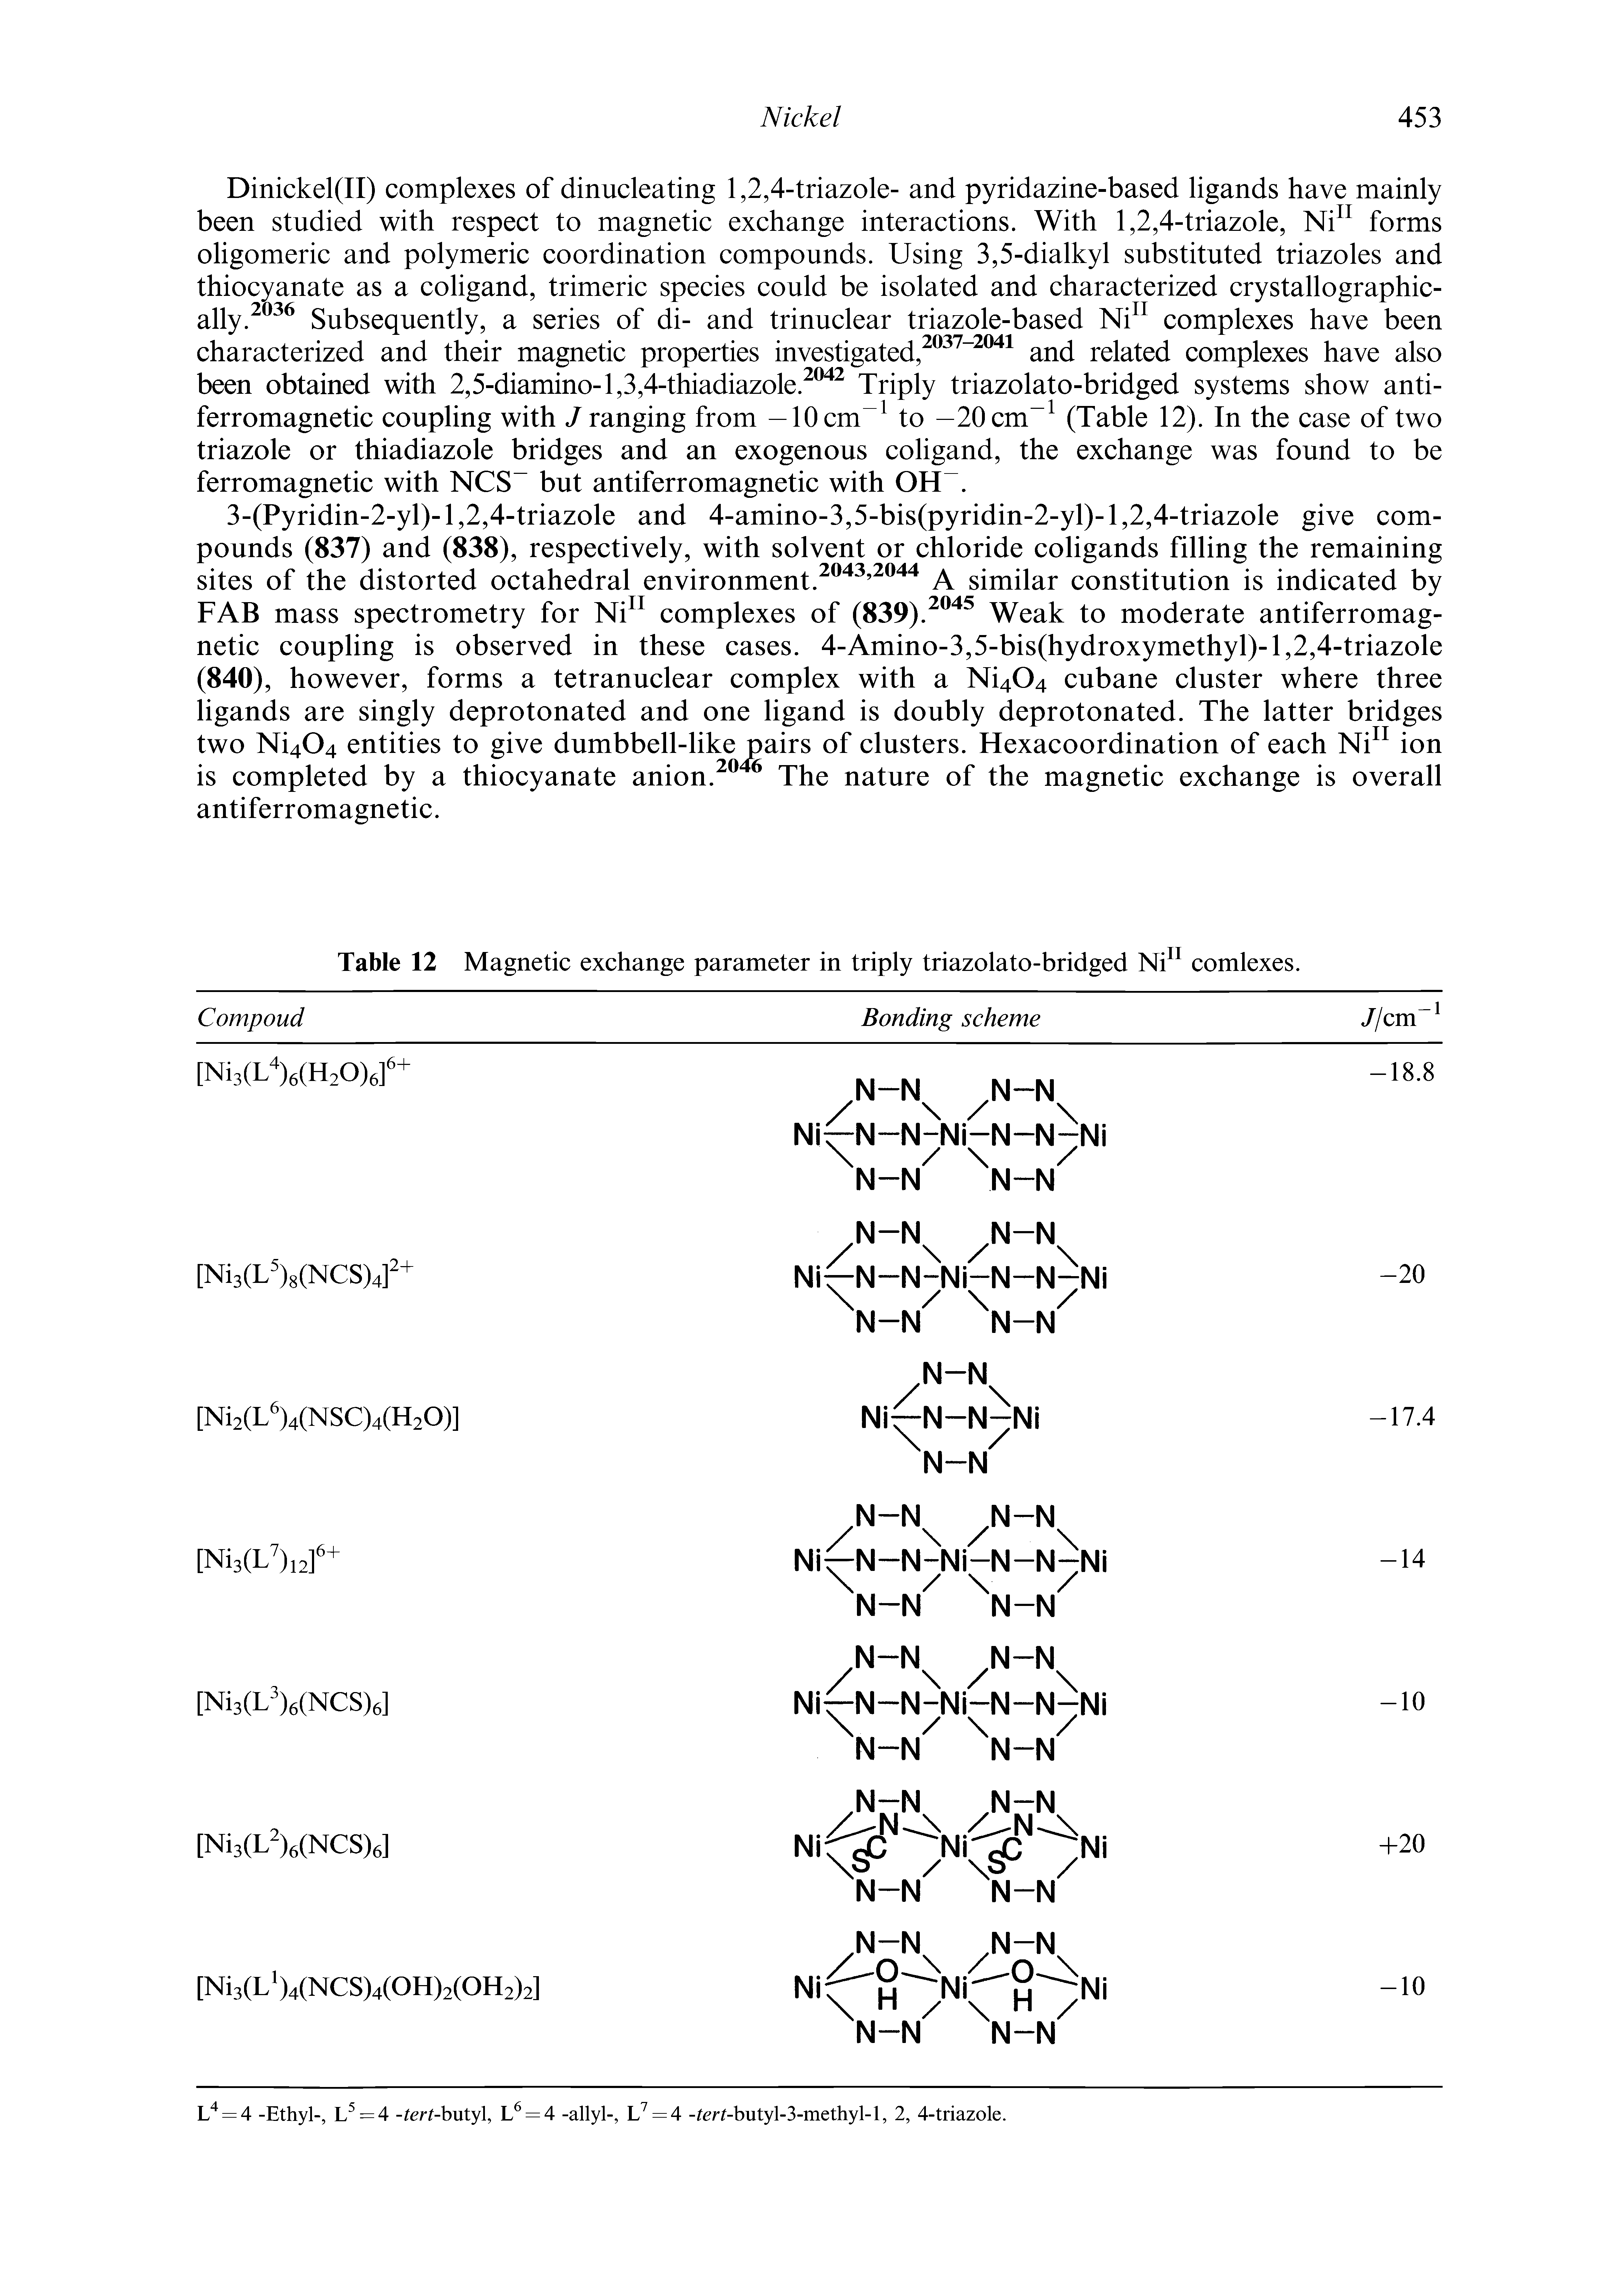 Table 12 Magnetic exchange parameter in triply triazolato-bridged Ni11 comlexes.